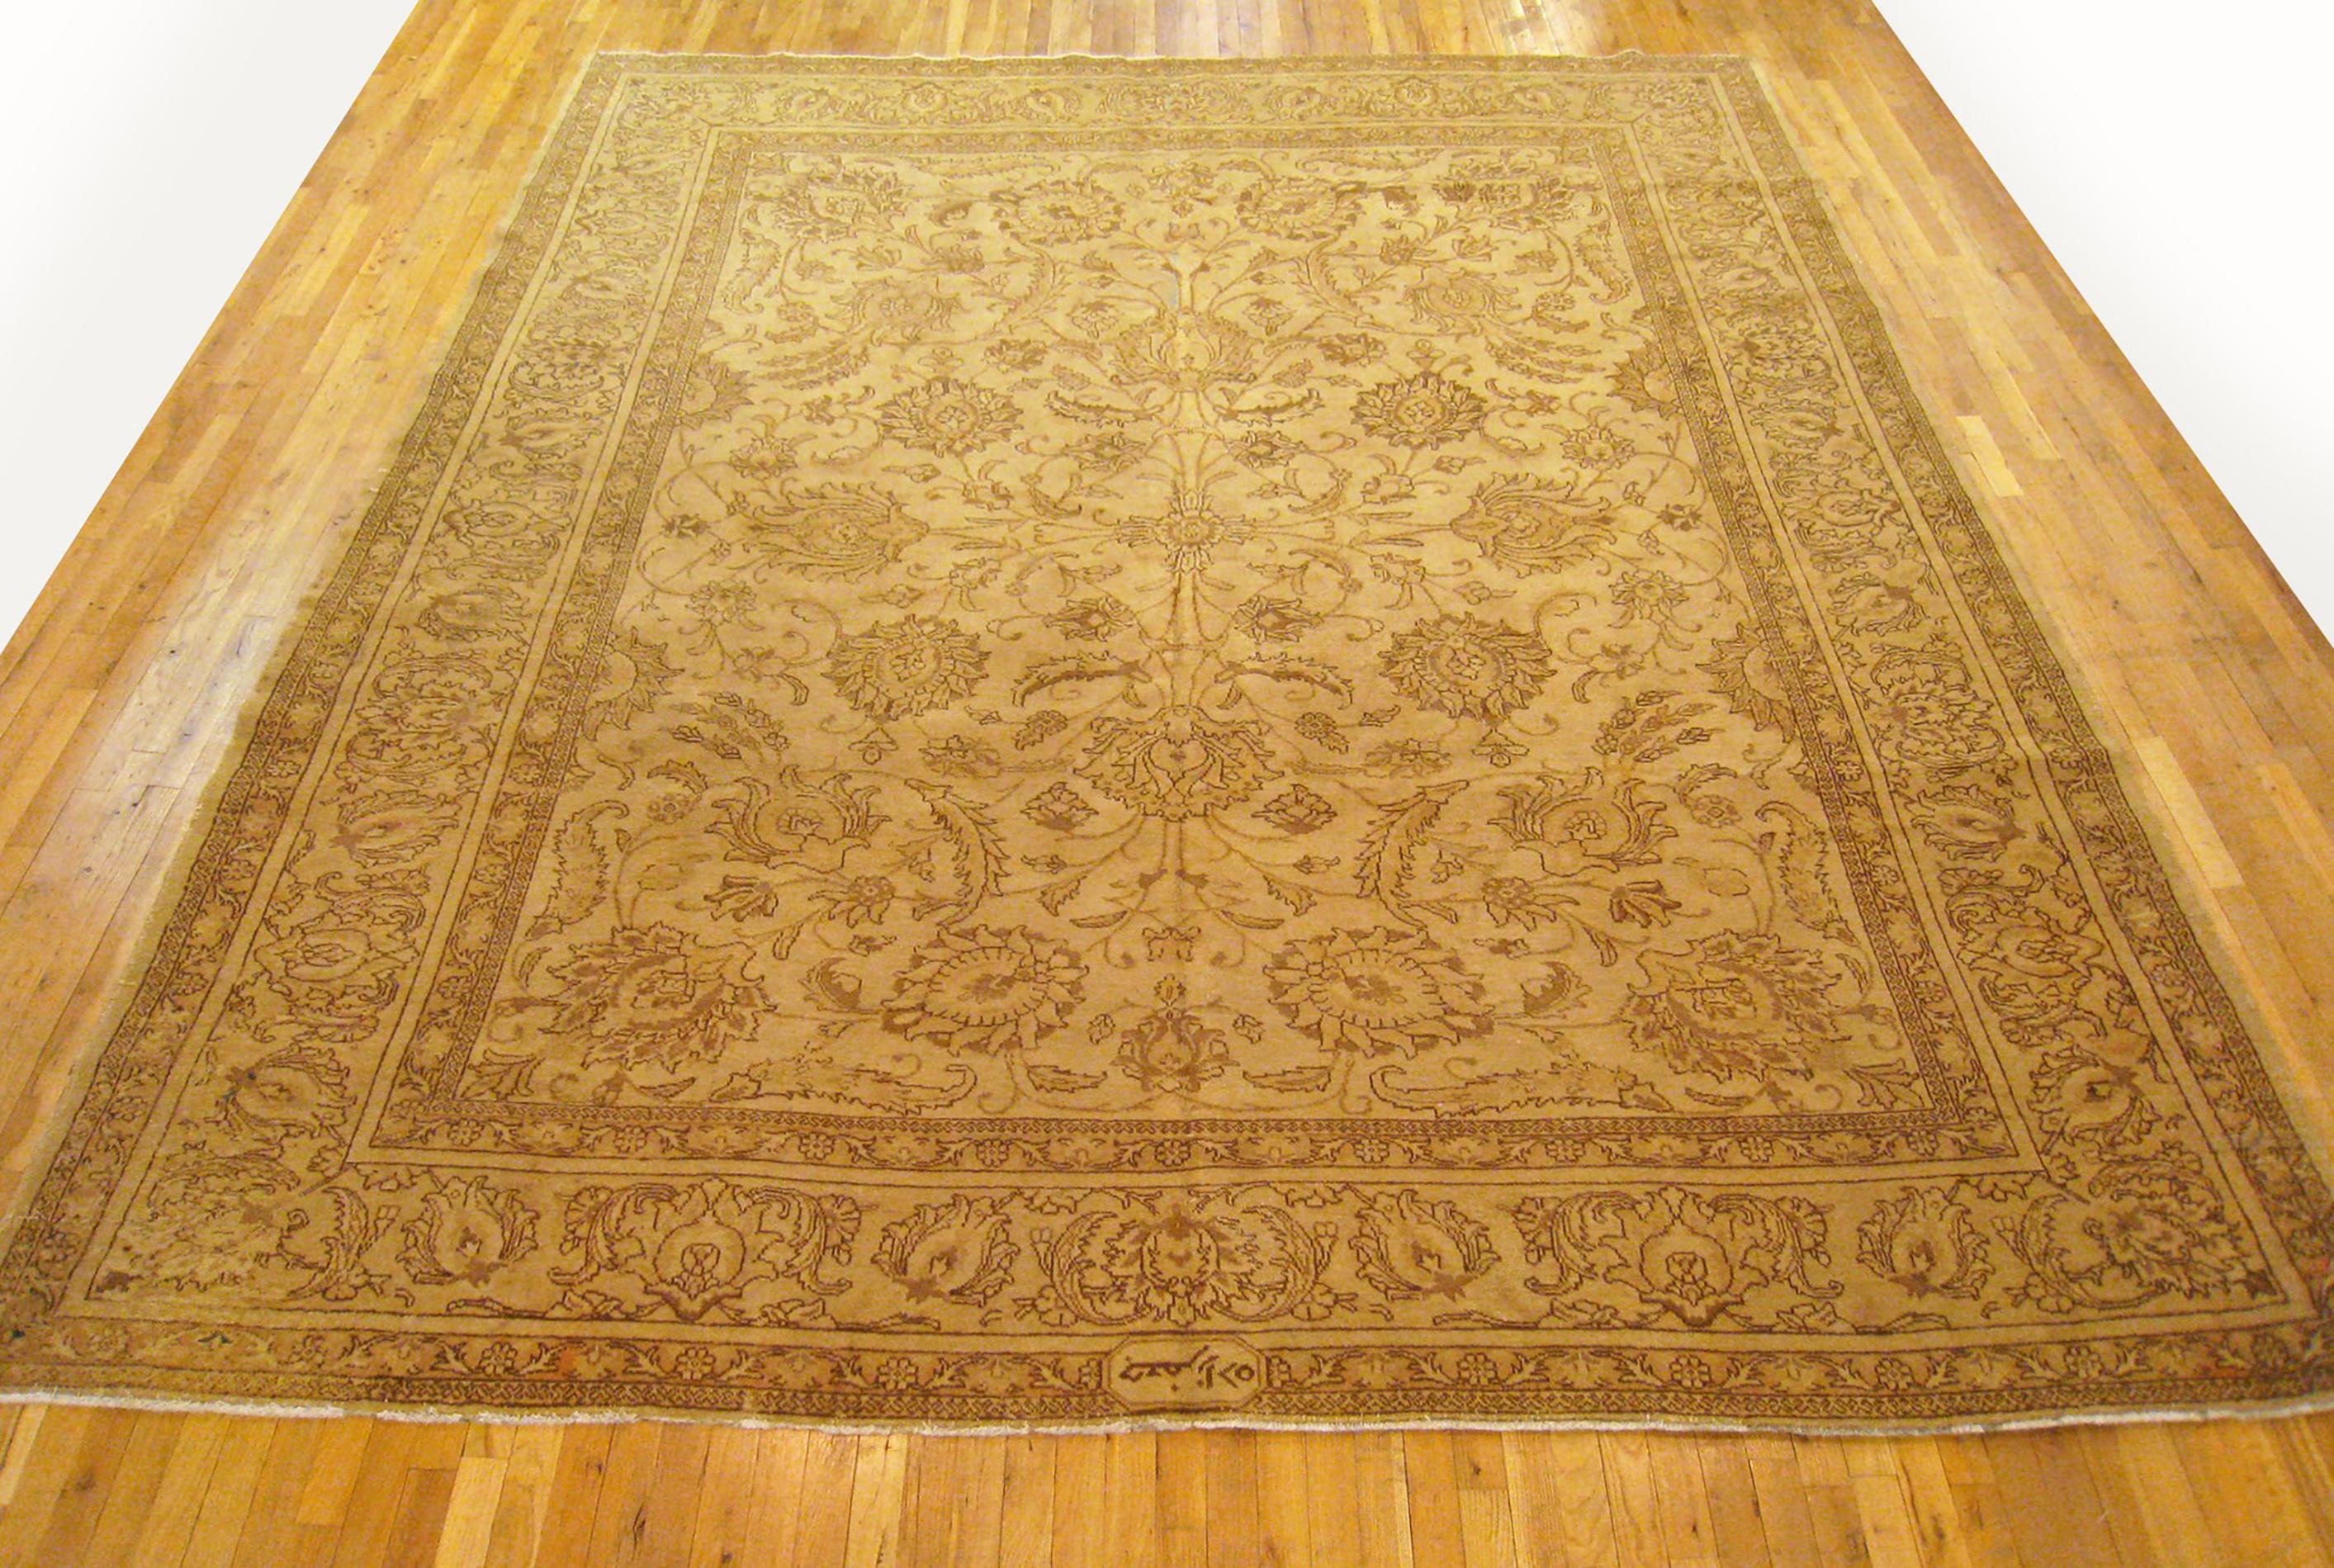 Vintage Perisan Tabriz oriental carpet, circa 1940, room sized.

A Vintage Persian Tabriz oriental carpet, circa 1940. Size: 13'0